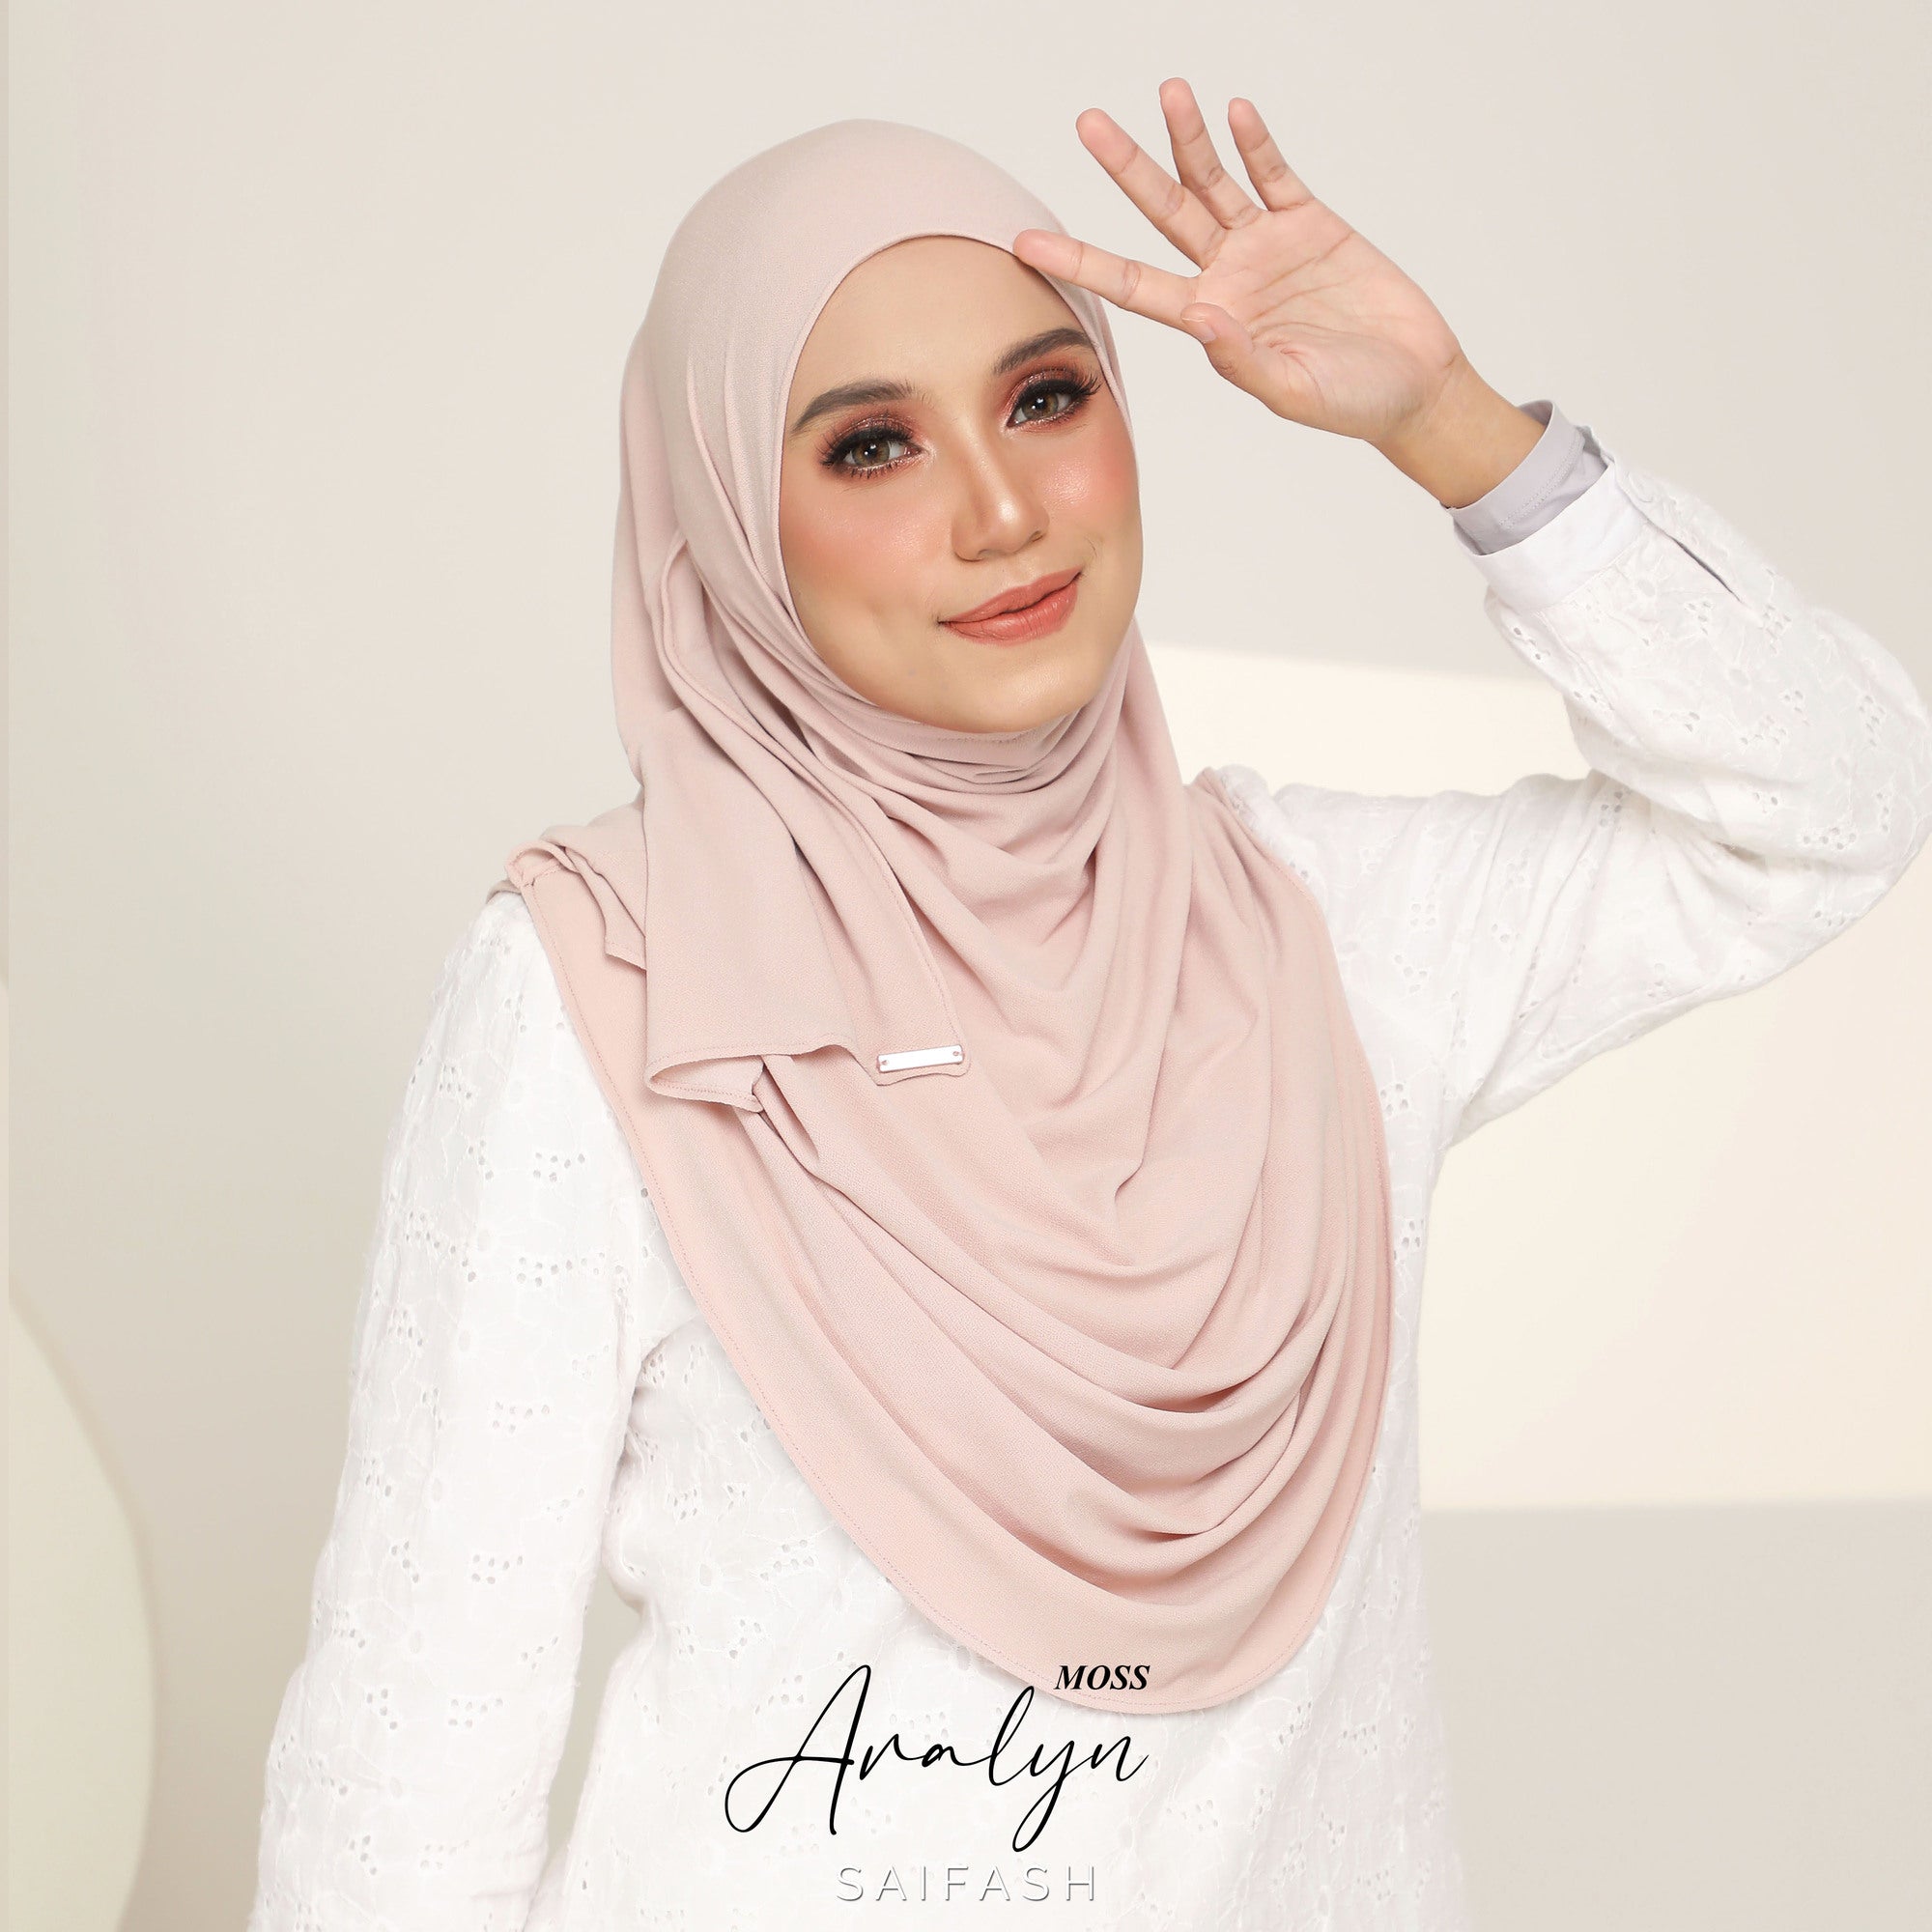 Aralyn Moss Instant Hijab in Waterlily